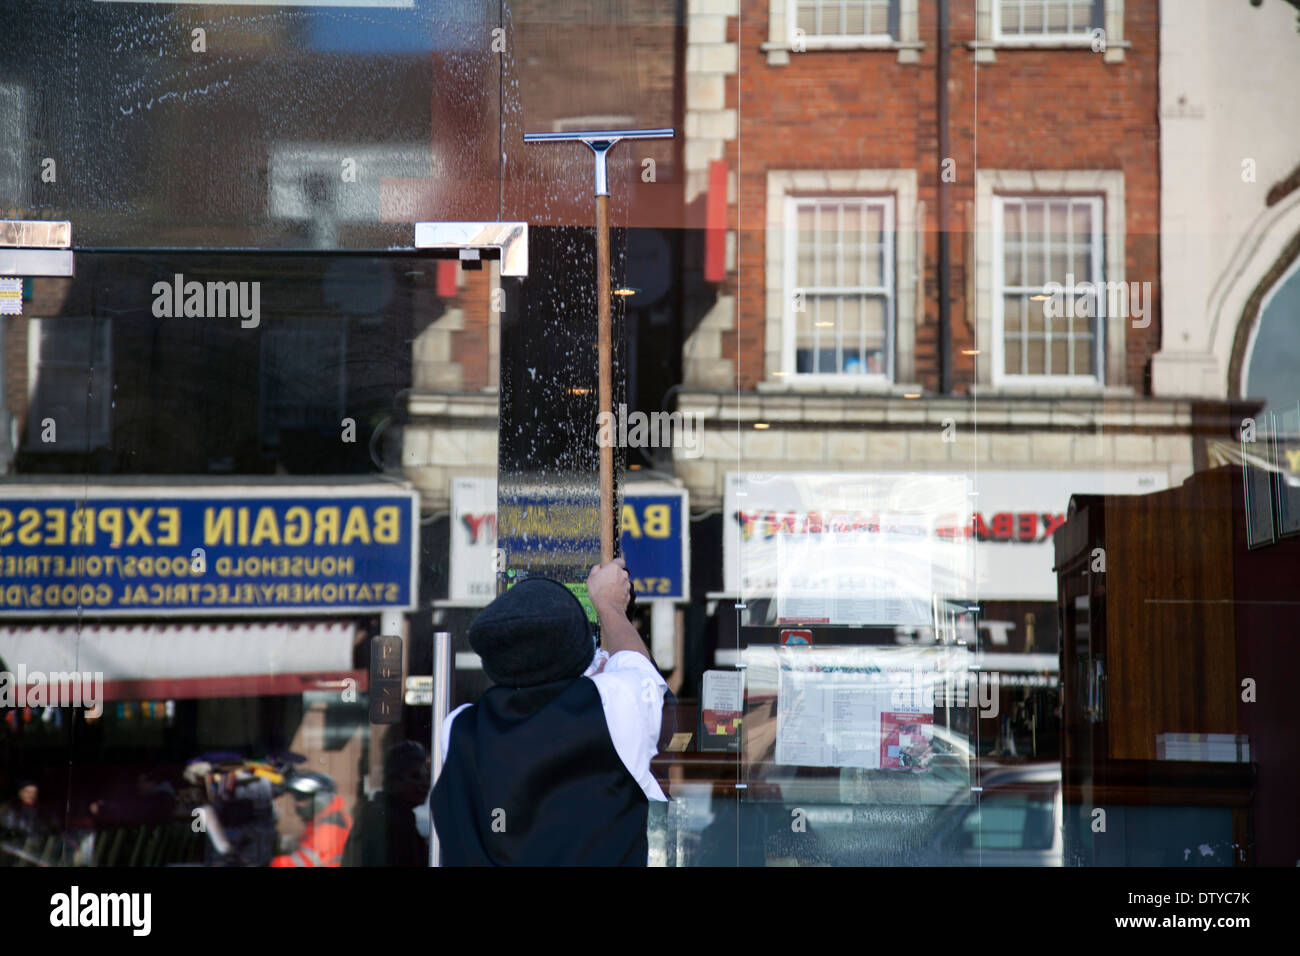 Man Washing Windows to Indian Restaurant in Clapham - London UK Stock Photo